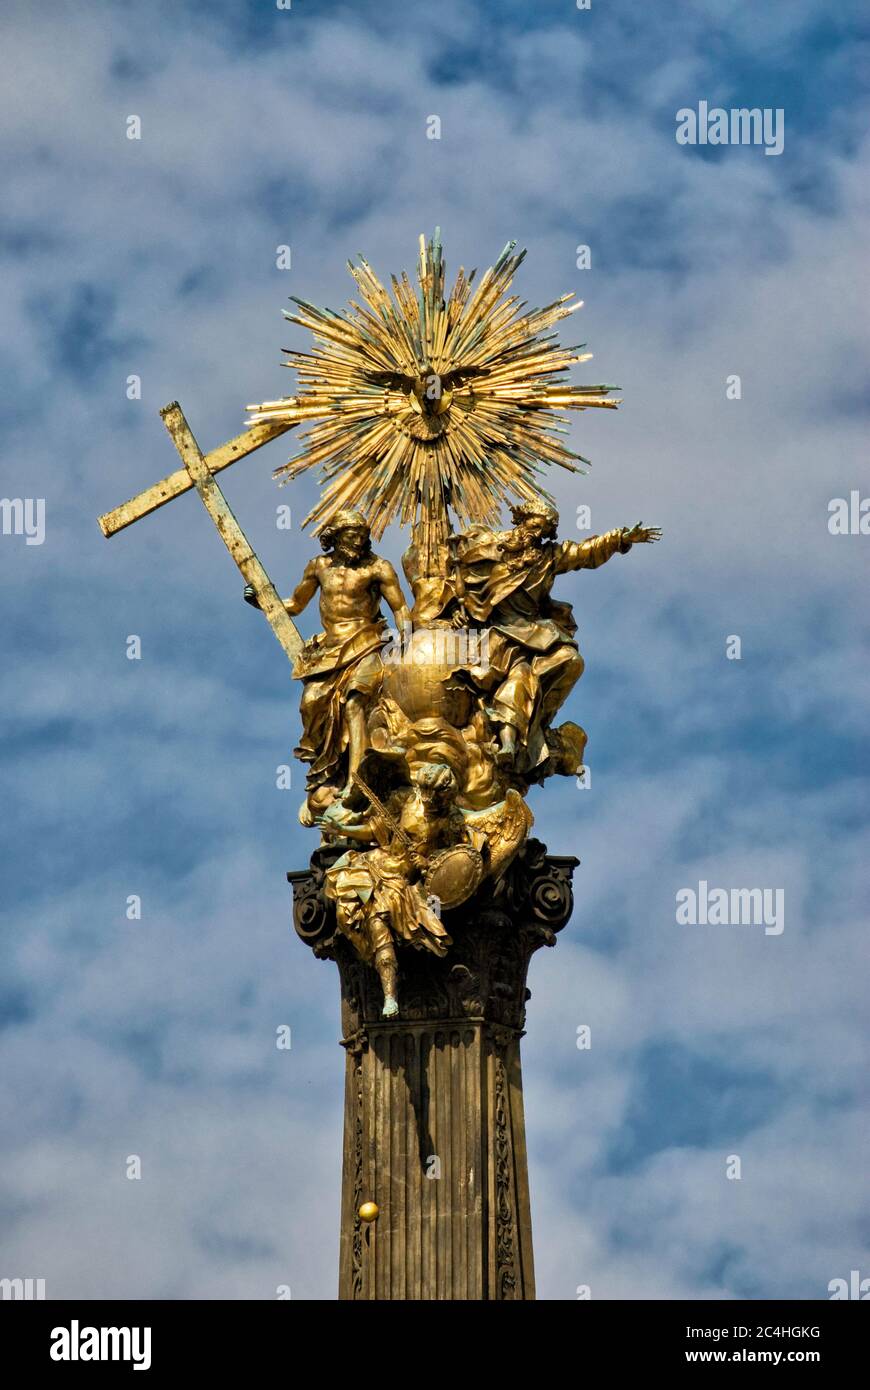 Holy Trinity Column, gold plated sunburst, at Horni namesti in Olomouc, Olomoucký kraj, Czech Republic Stock Photo